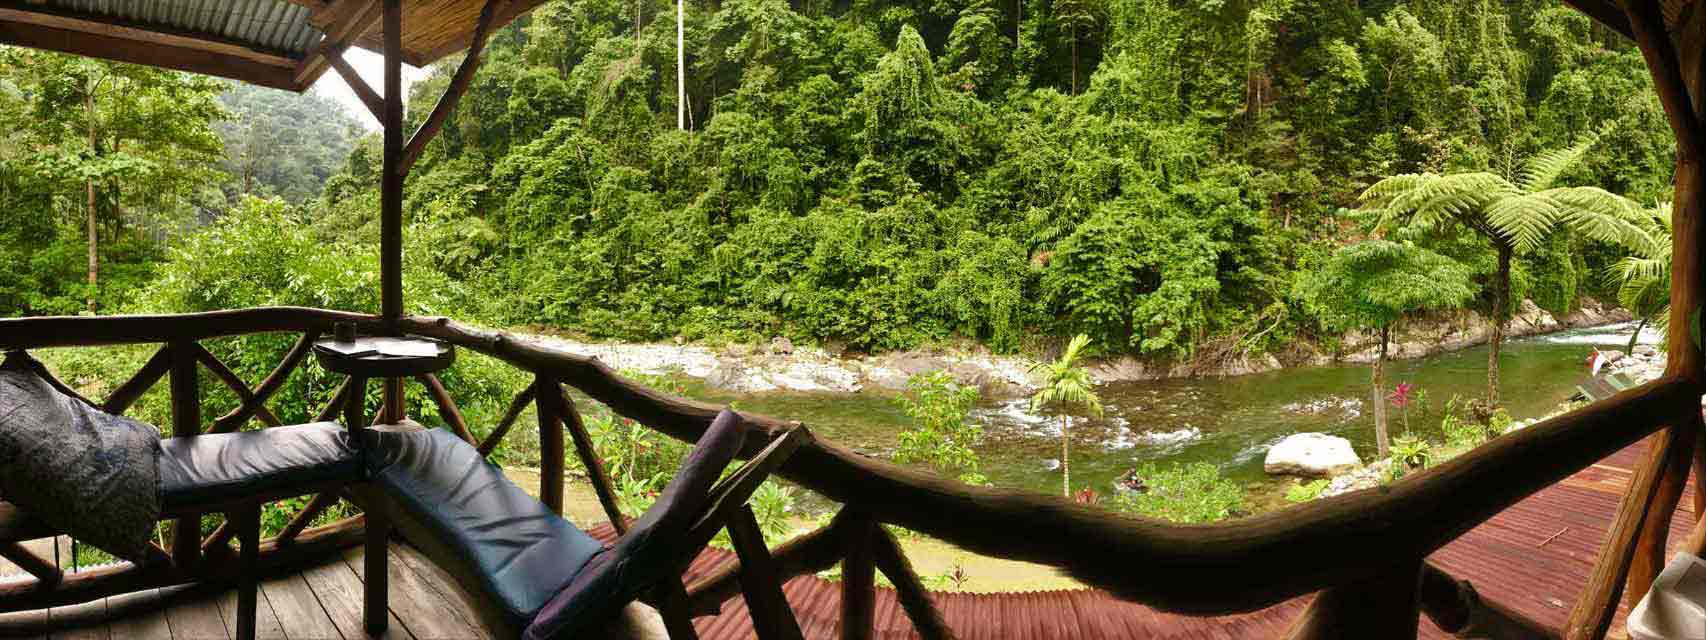 curly nomad asia indonesia sumatra lodge balcony jungle river photo